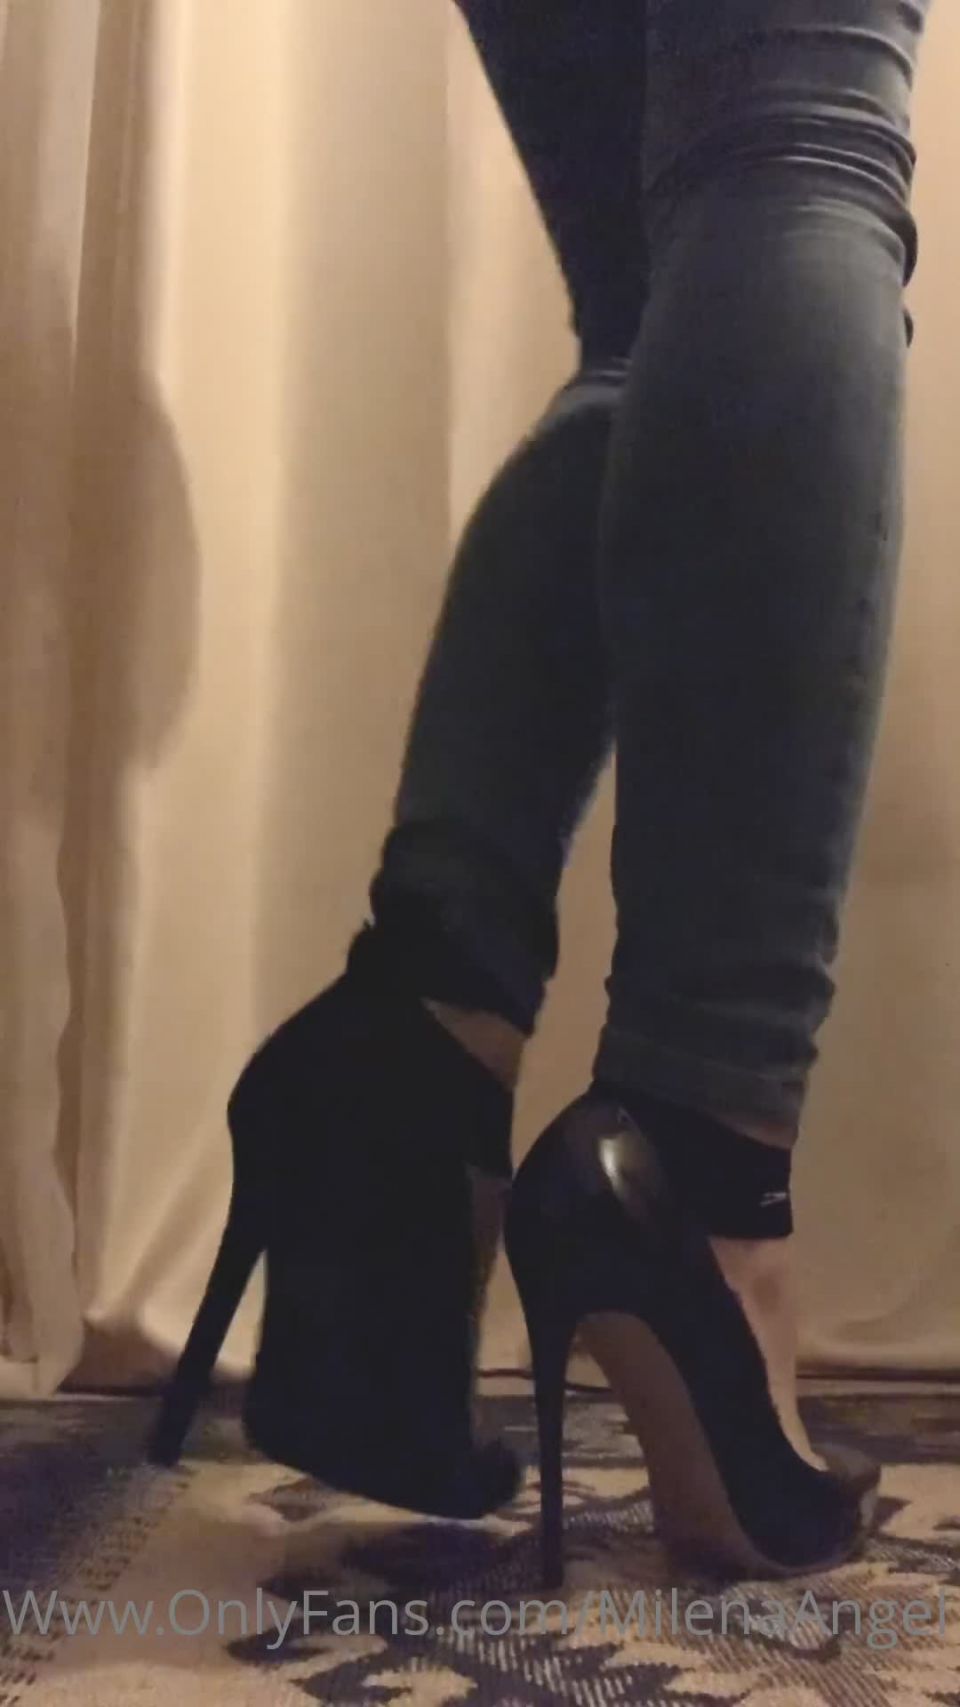 Milena Angel () Milenaangel - trying on new heels a kind of footfetish vid 29-11-2020